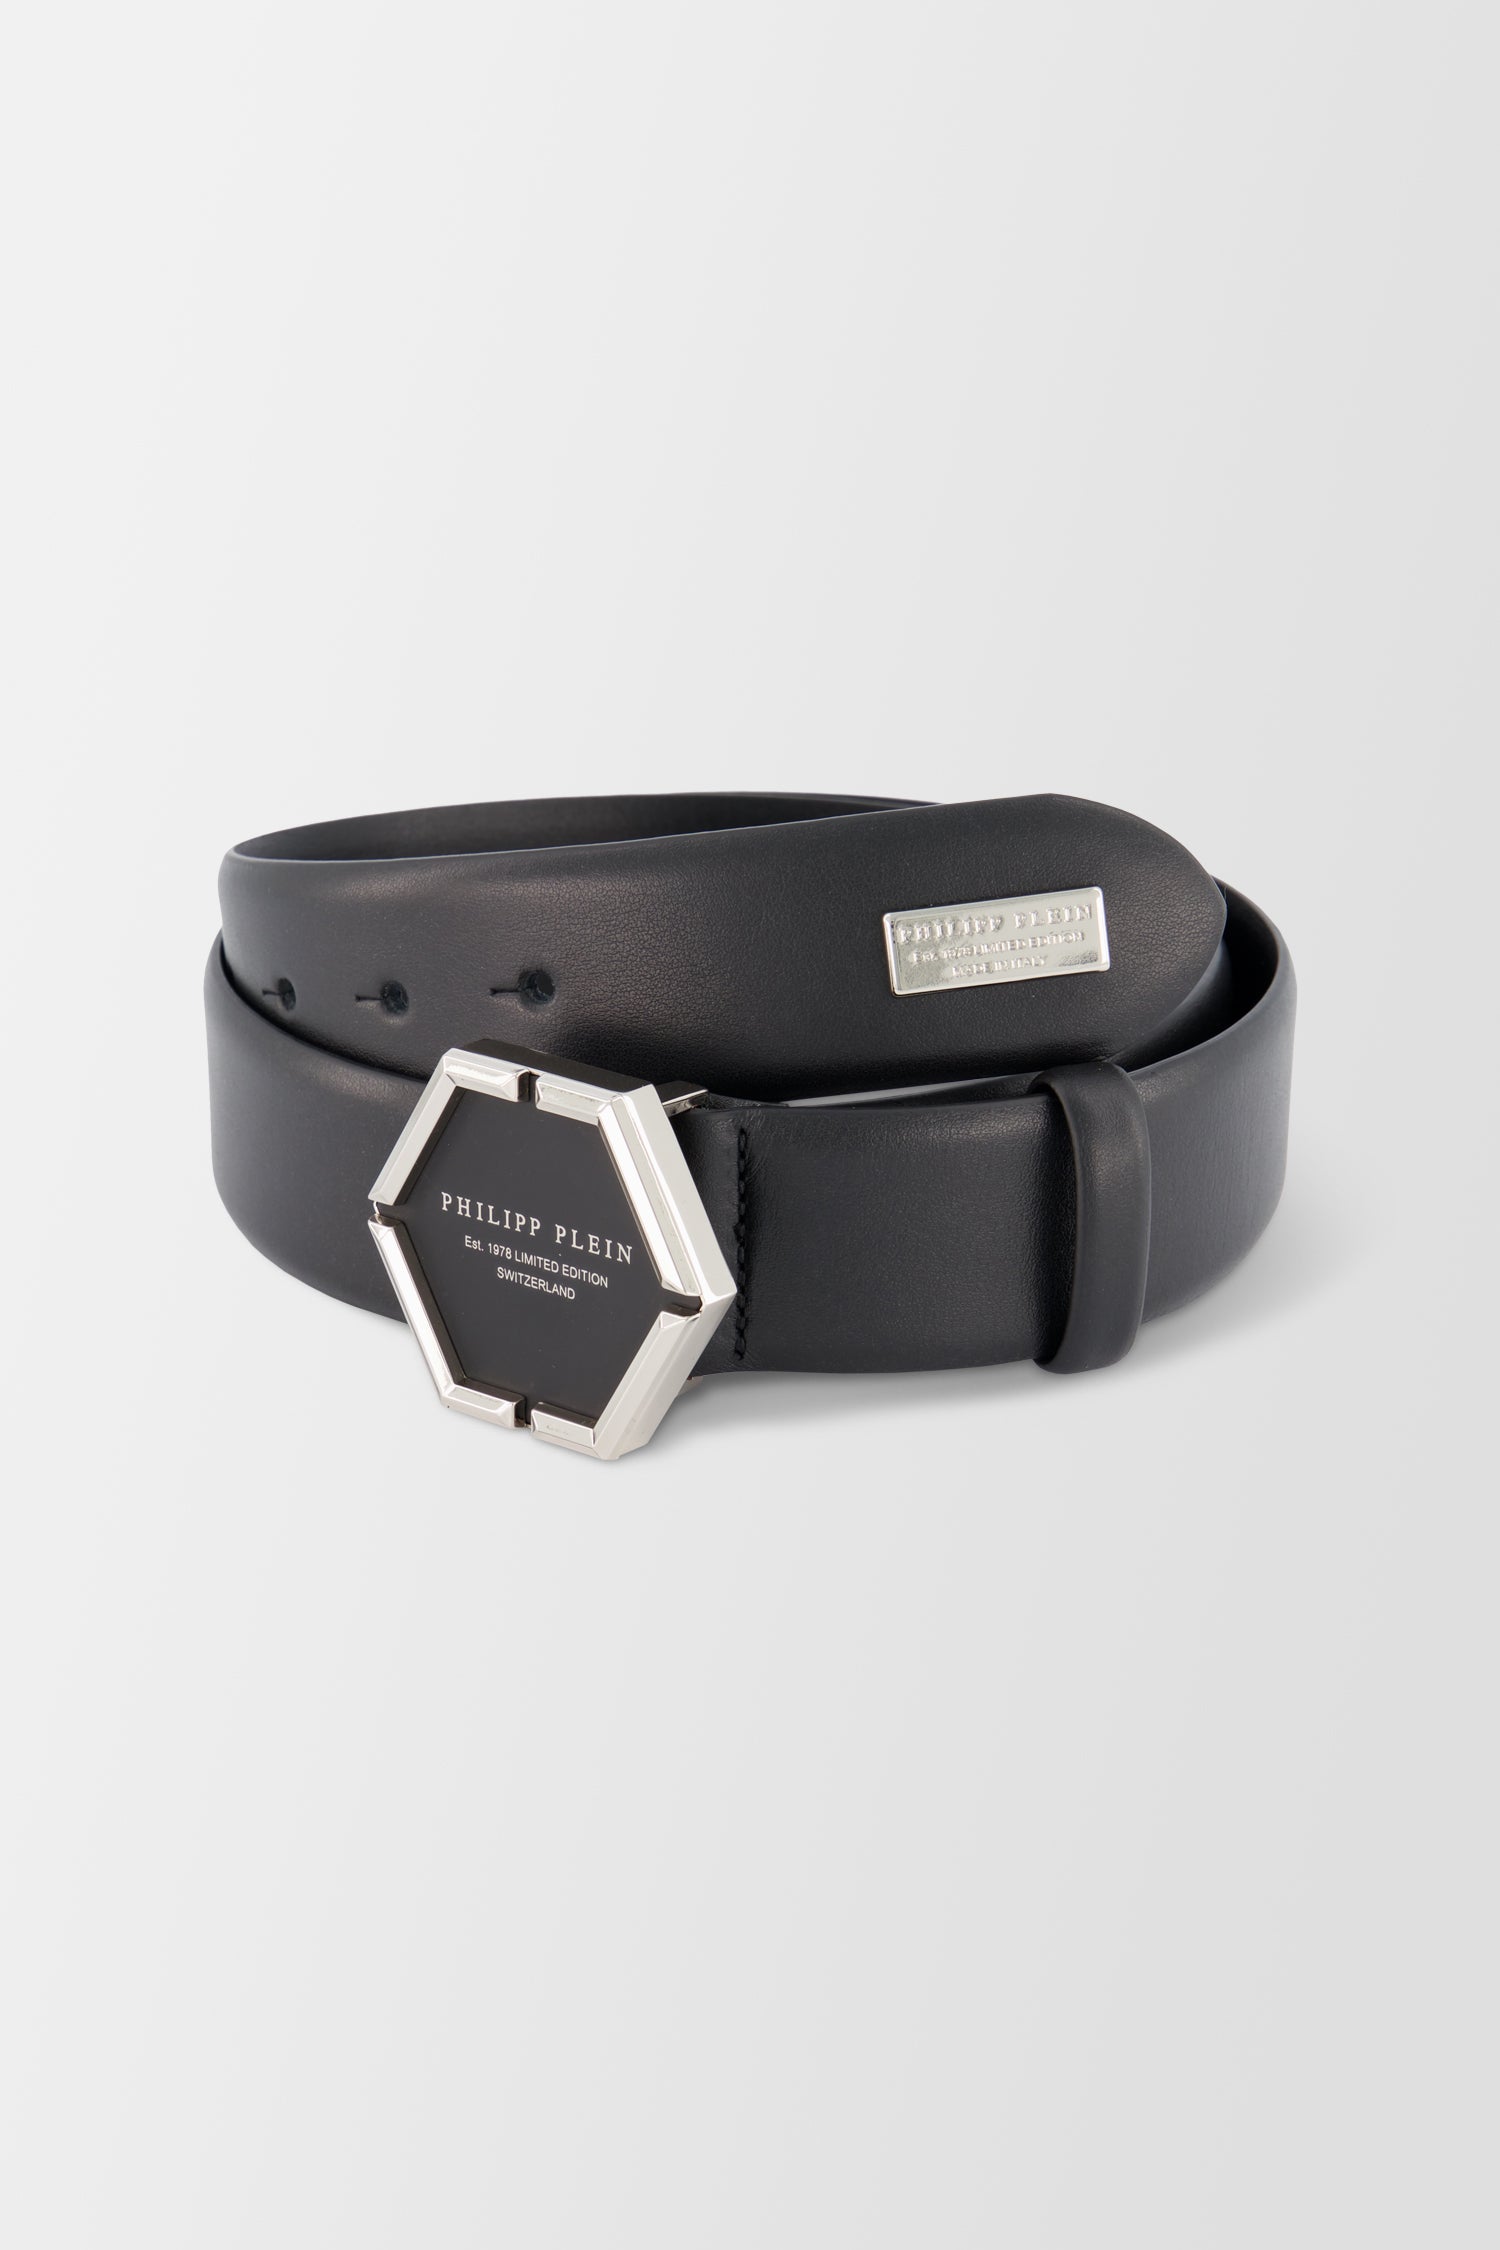 Philipp Plein Black Leather Belt